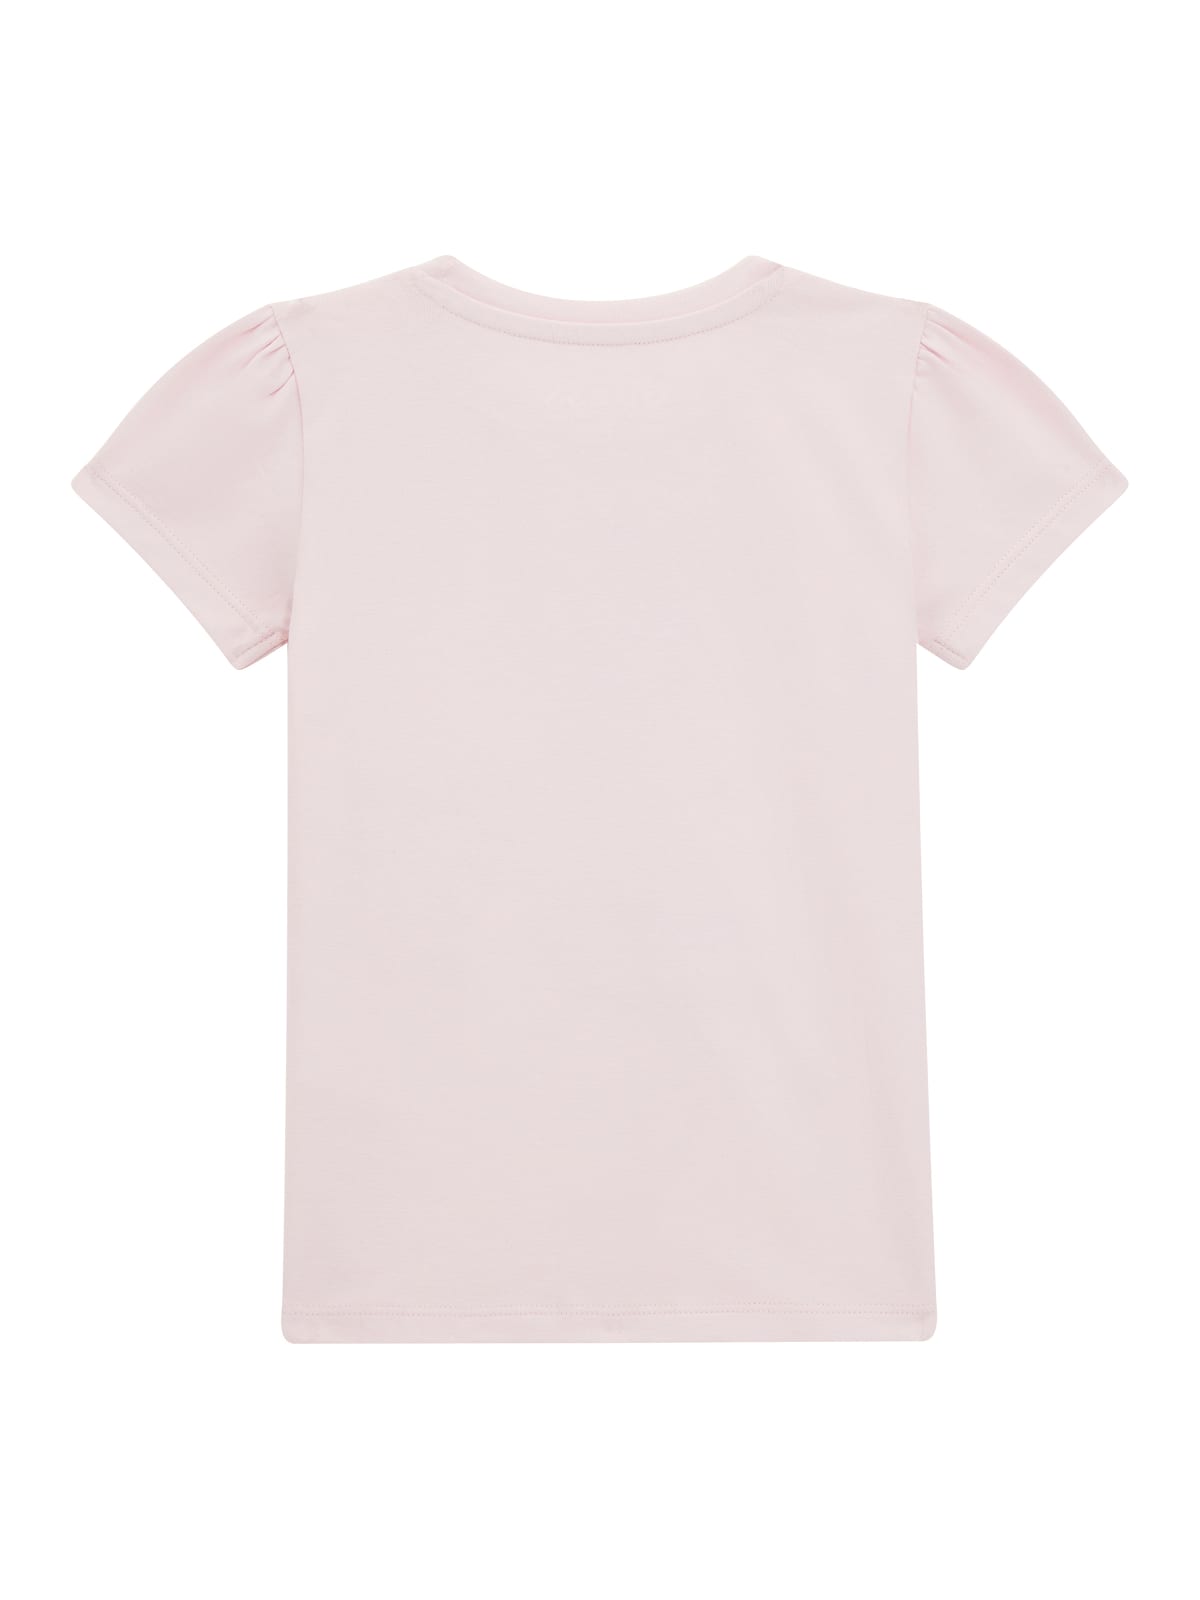 Mädchen T-Shirt K4RI21 K6YW4 Rosa